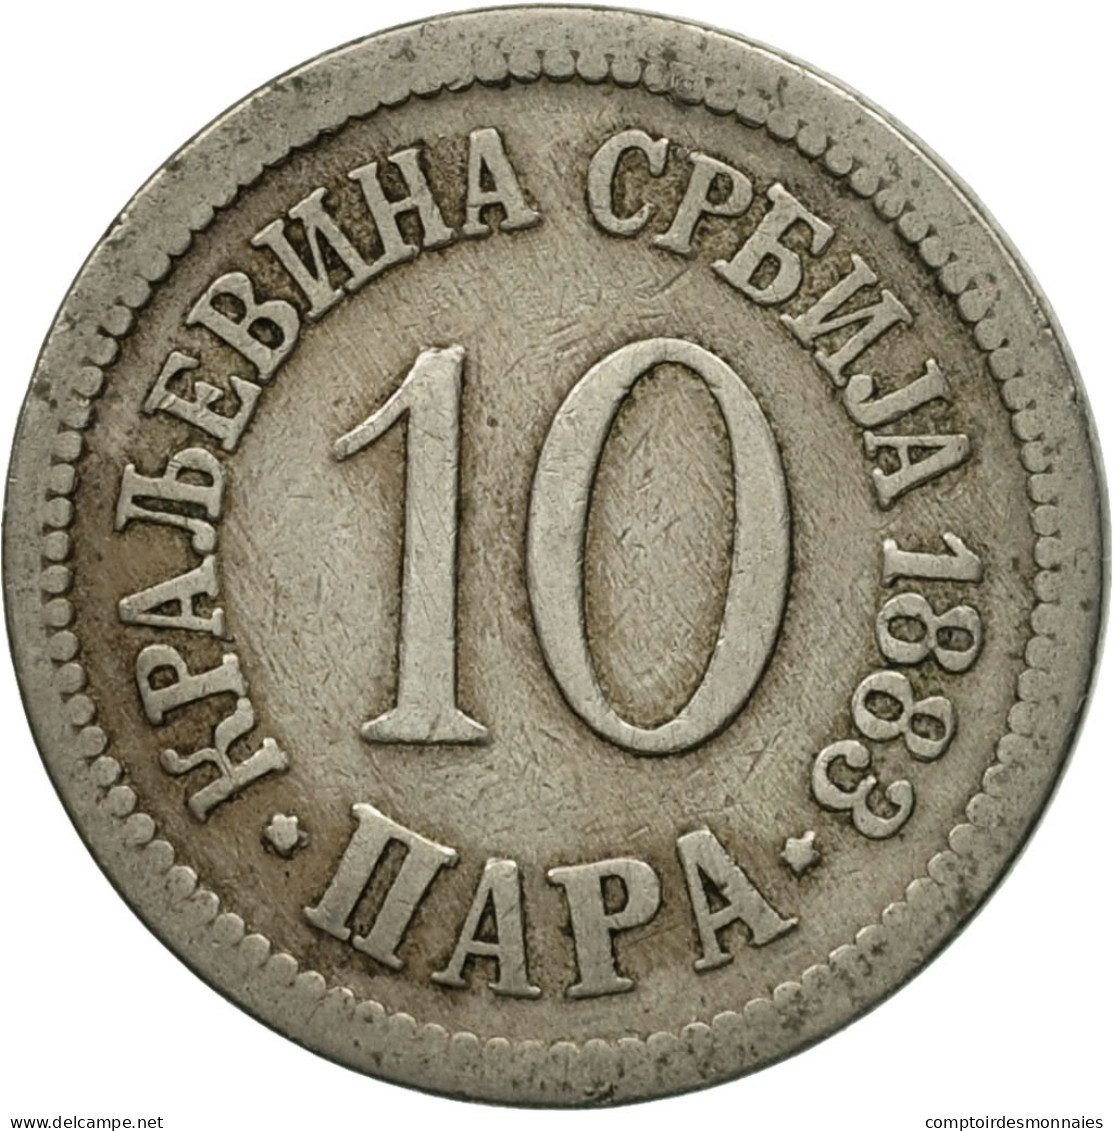 Monnaie, Serbie, Milan I, 10 Para, 1883, TB+, Copper-nickel, KM:19 - Serbie